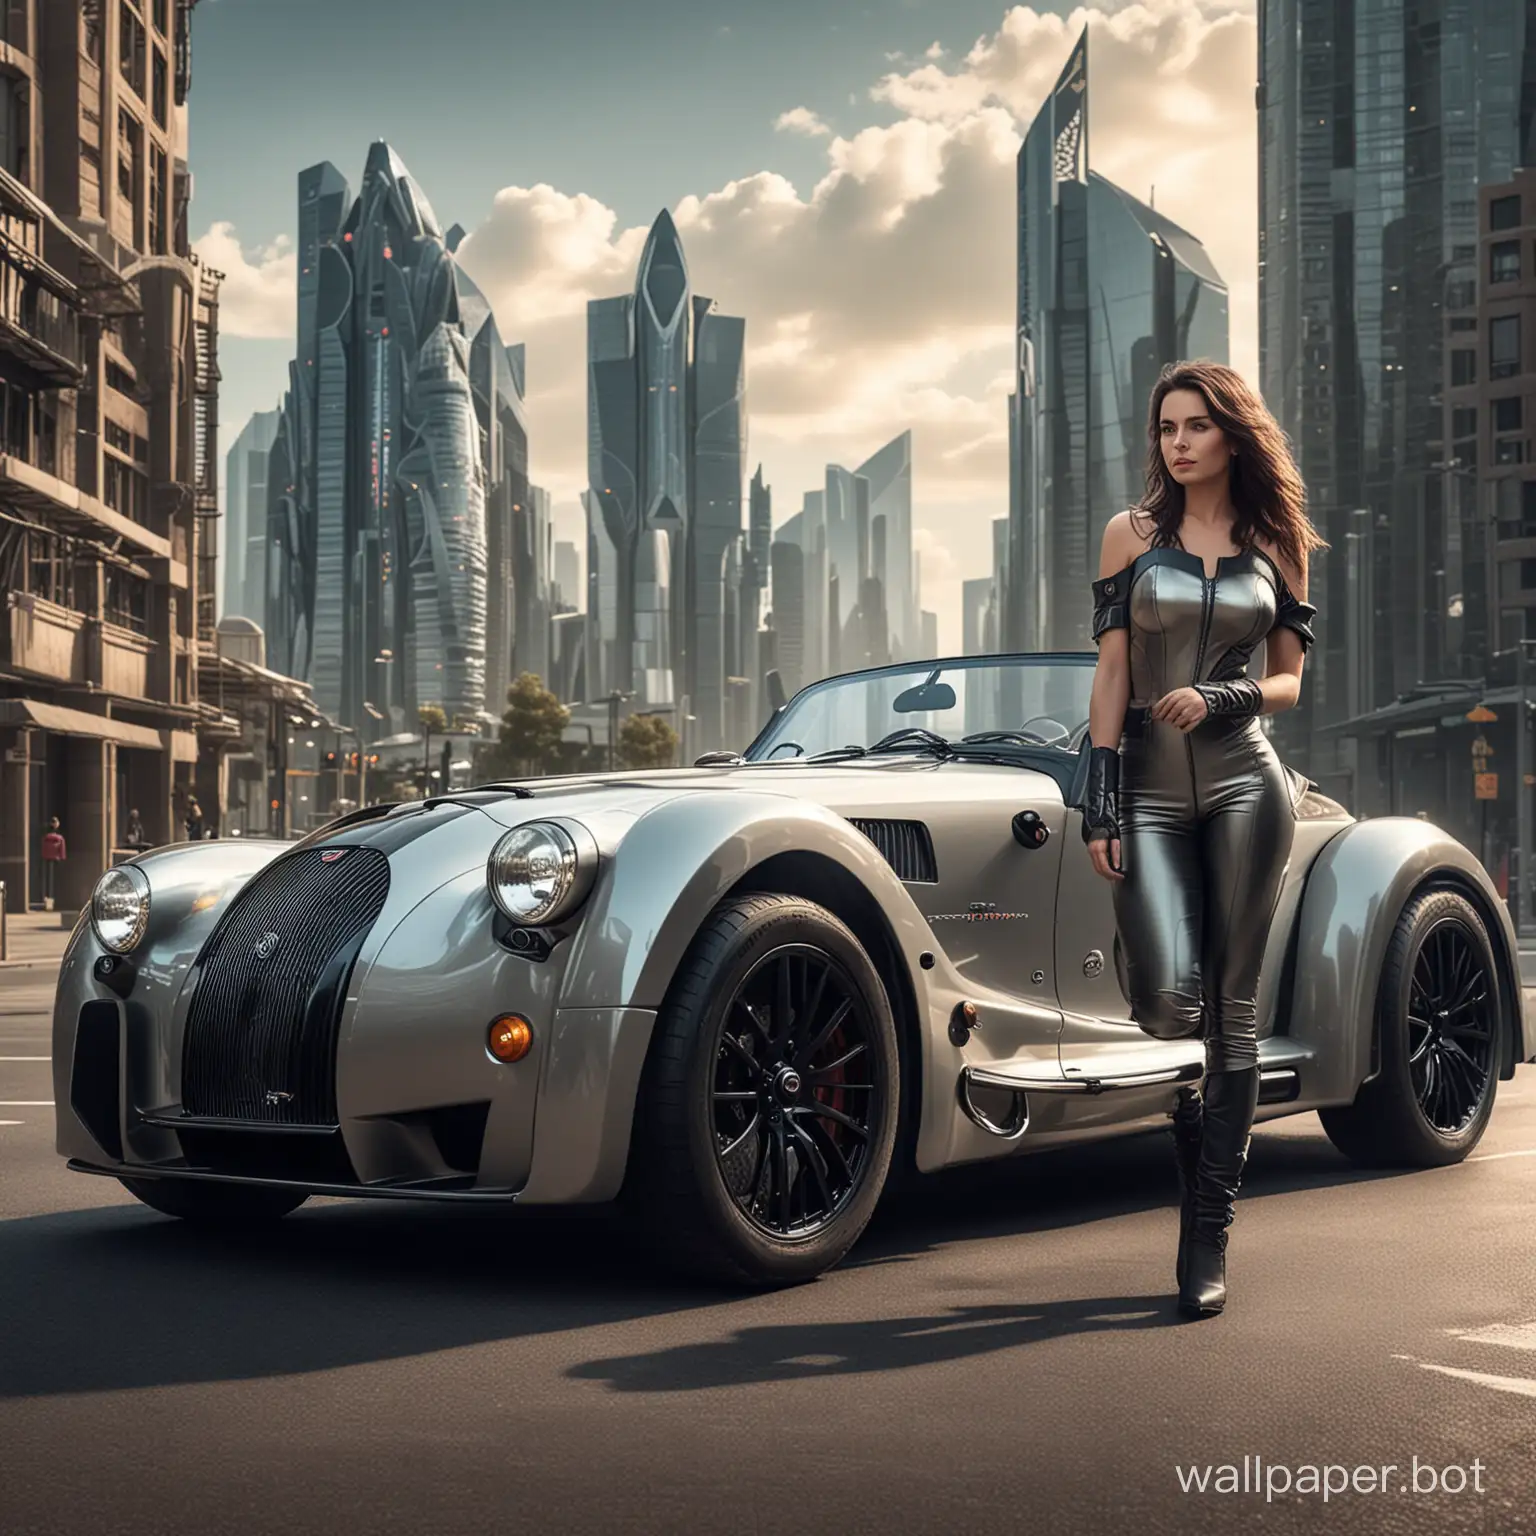 Brunette-Girl-Standing-by-Morgan-Car-in-Futuristic-Cityscape